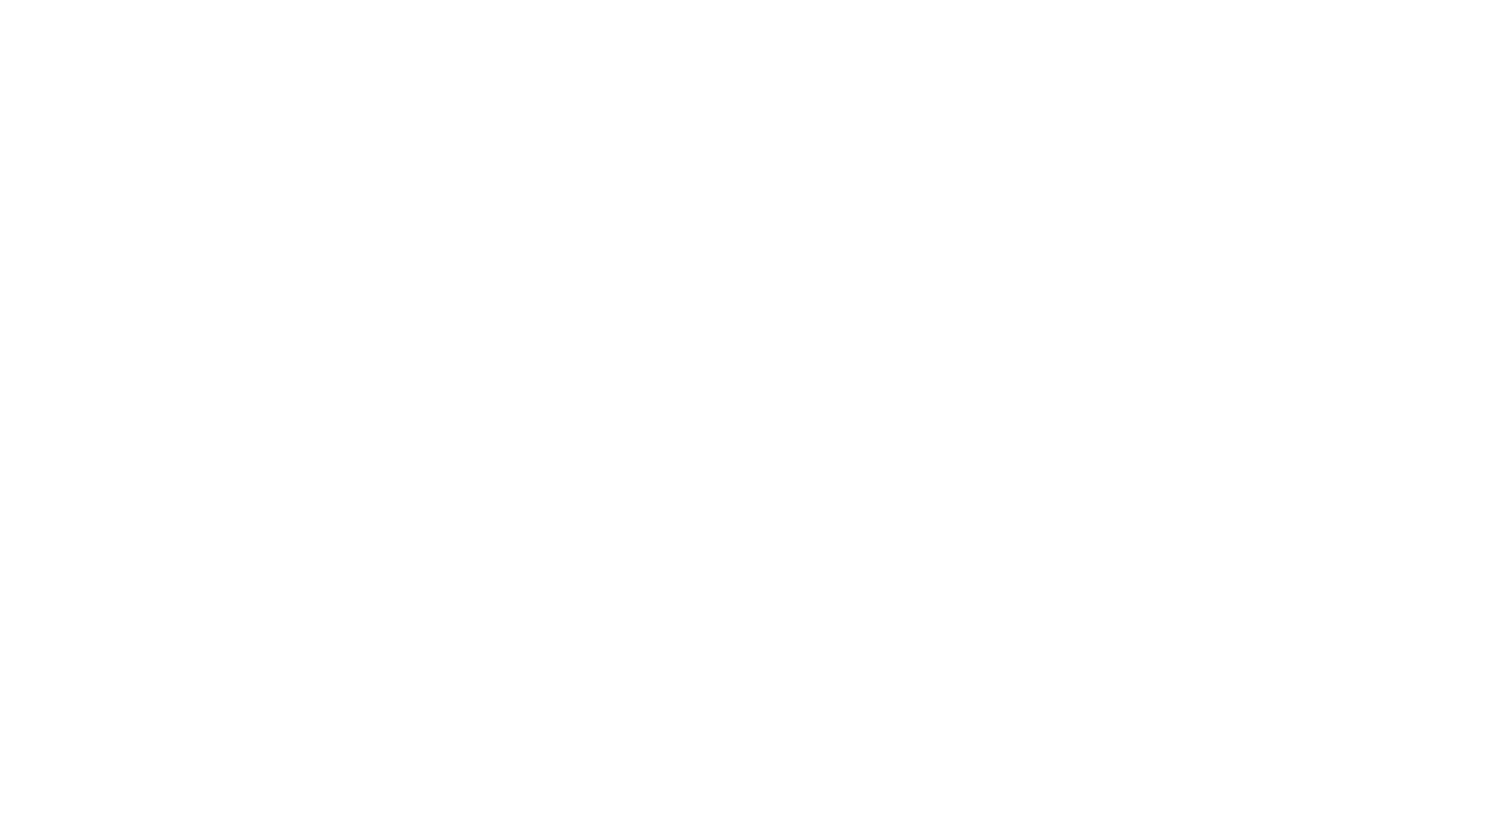 Incito Executive and Leadership Development